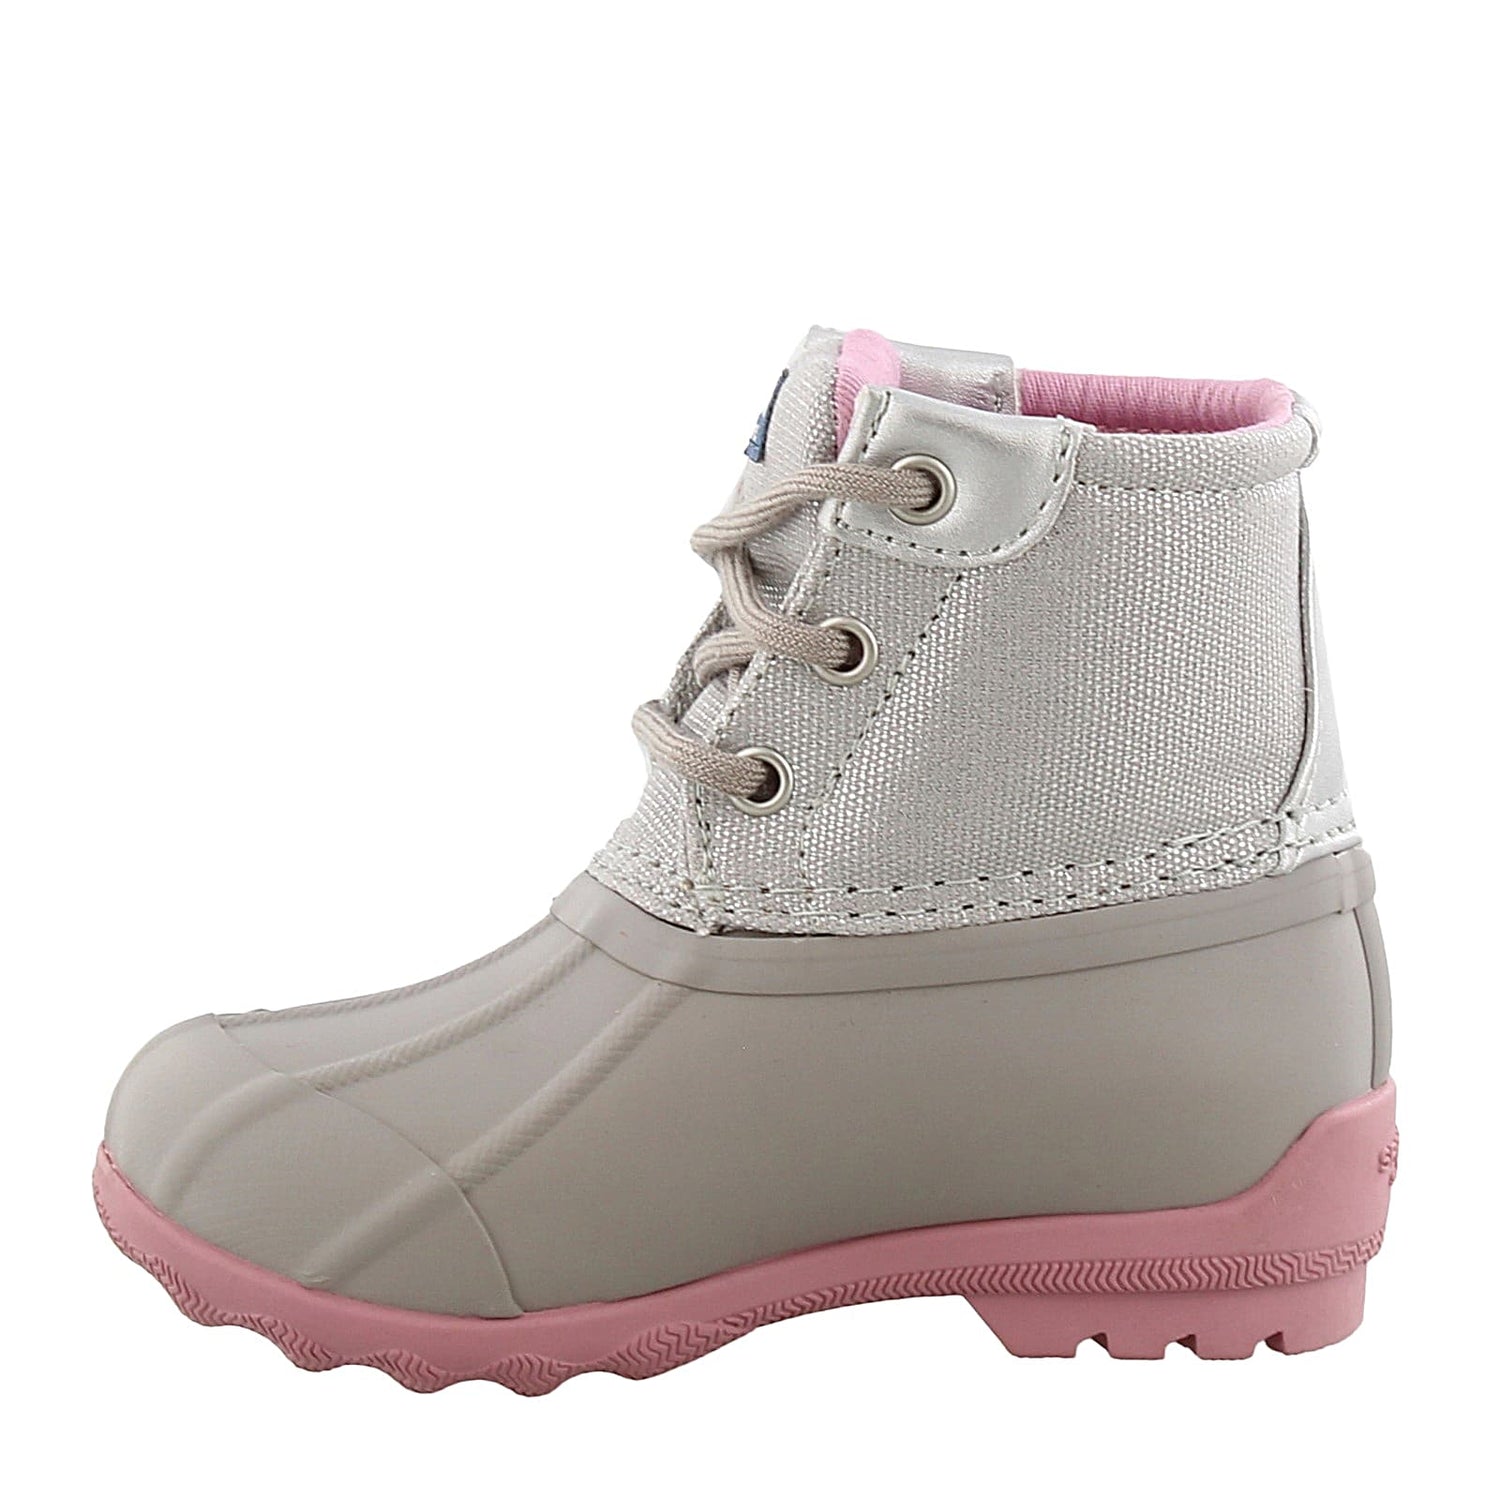 Peltz Shoes  Girl's Sperry Kids Port Boot - Toddler & Little Kid